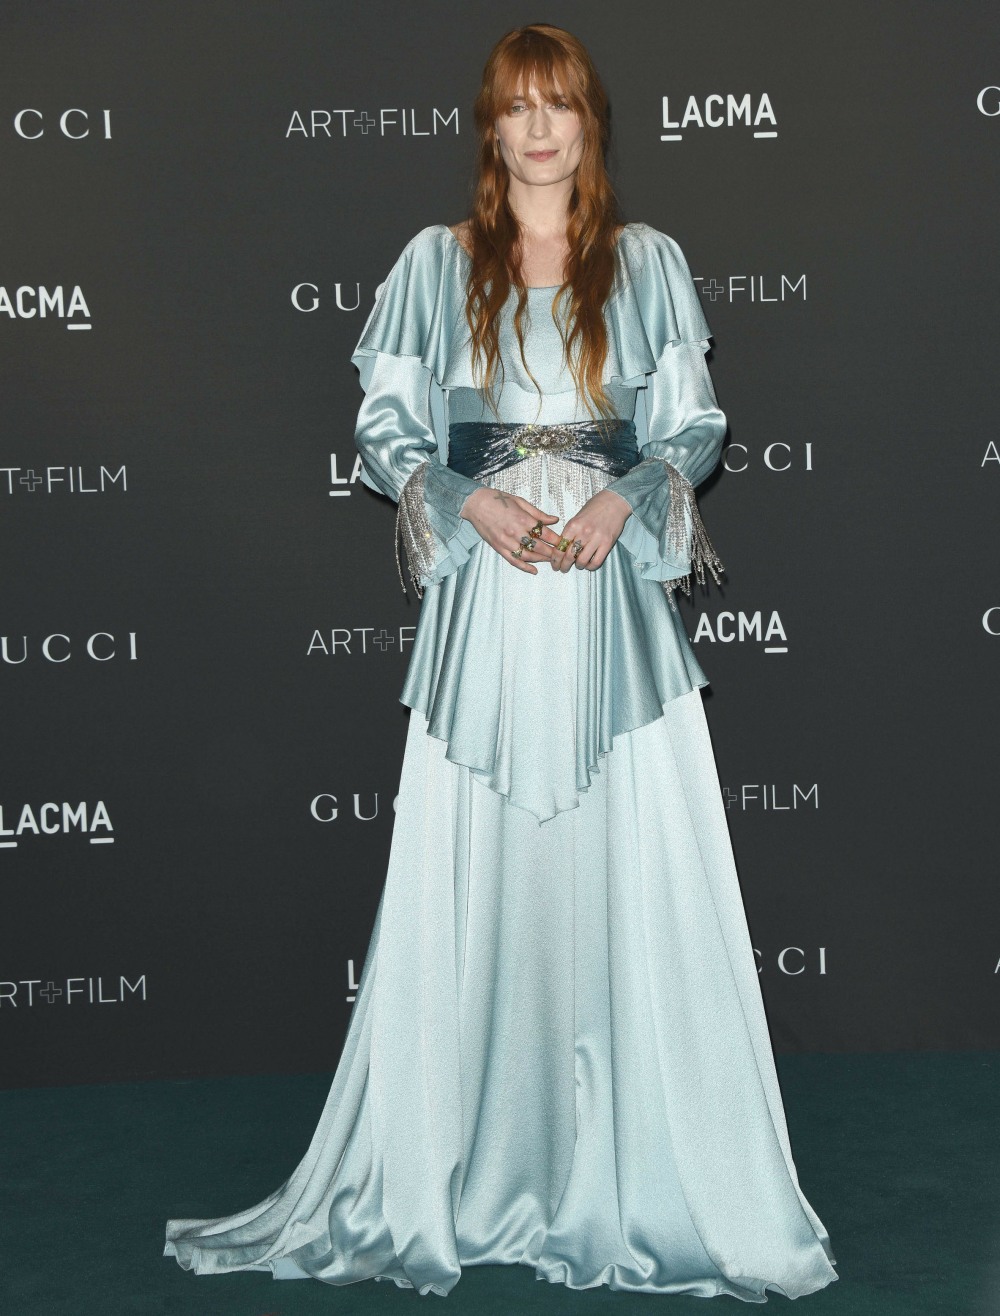 10th Annual LACMA ART + FILM GALA presented by Gucci